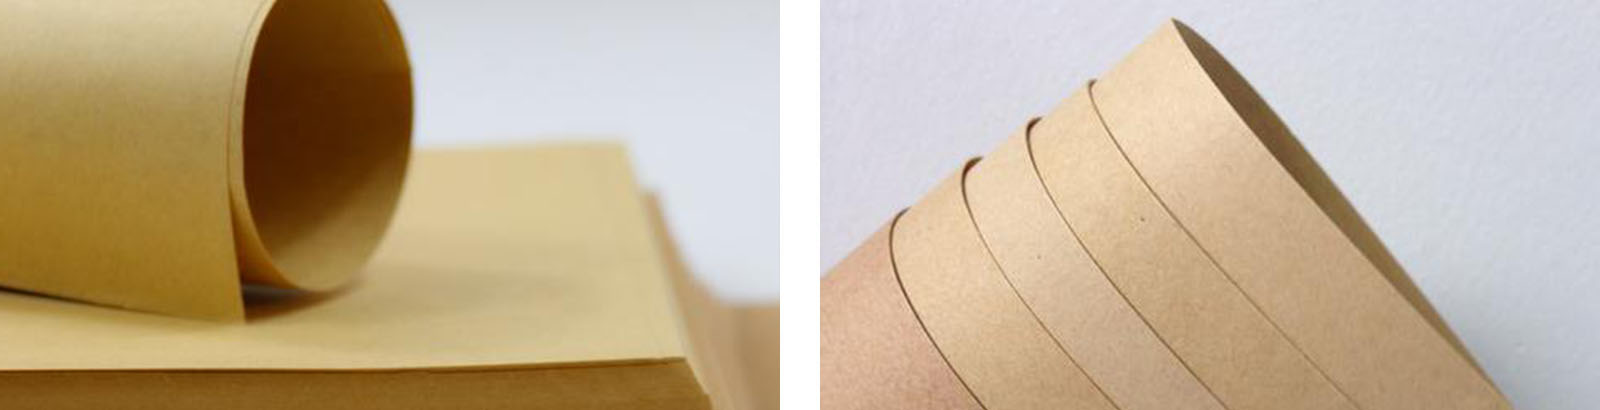 Vellum -- Material For Making Paper Handles